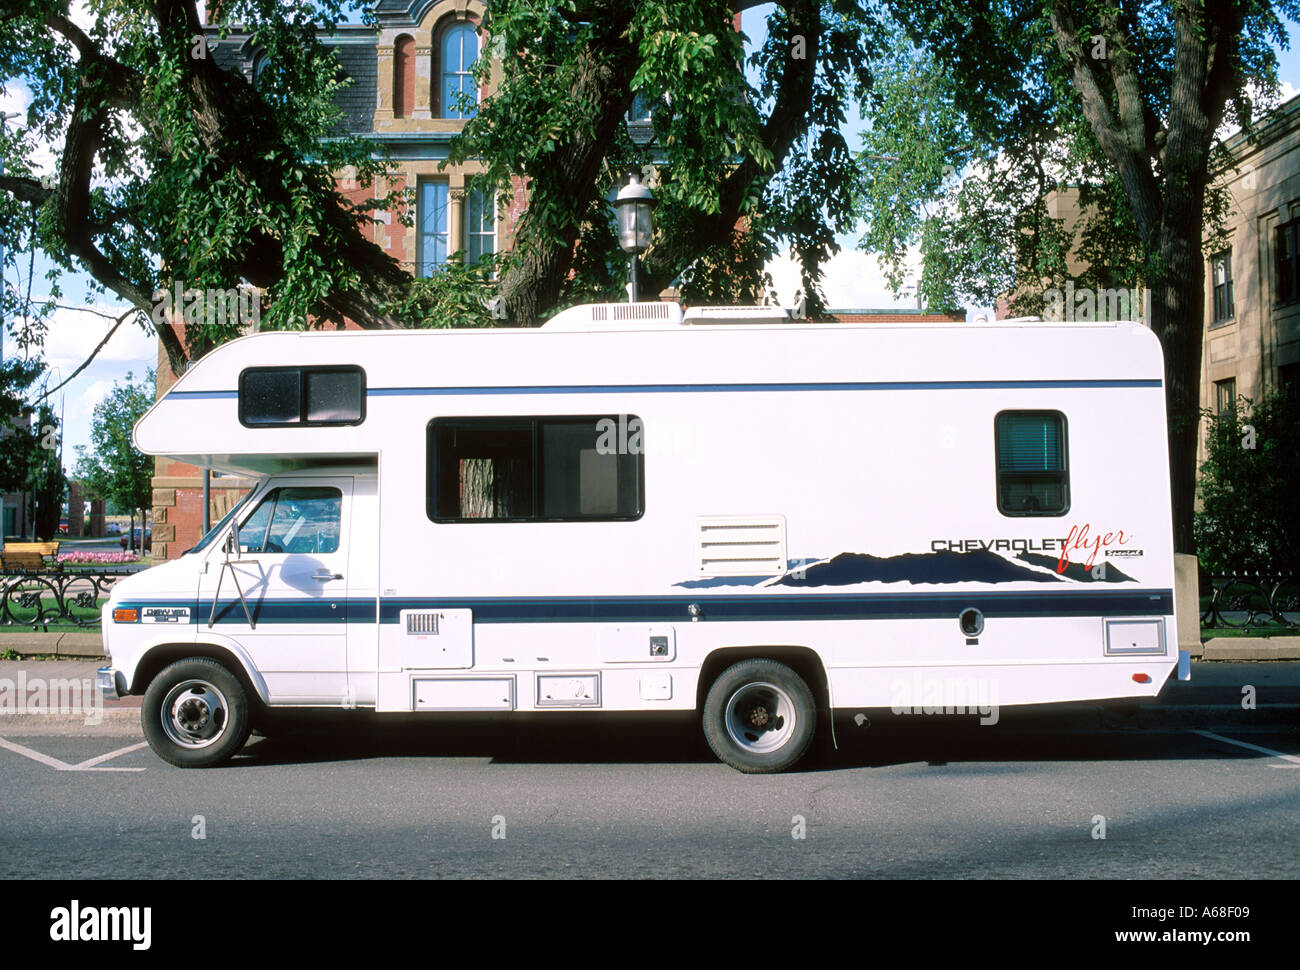 Caravan recreational vehicle parked on a city street Stock Photo